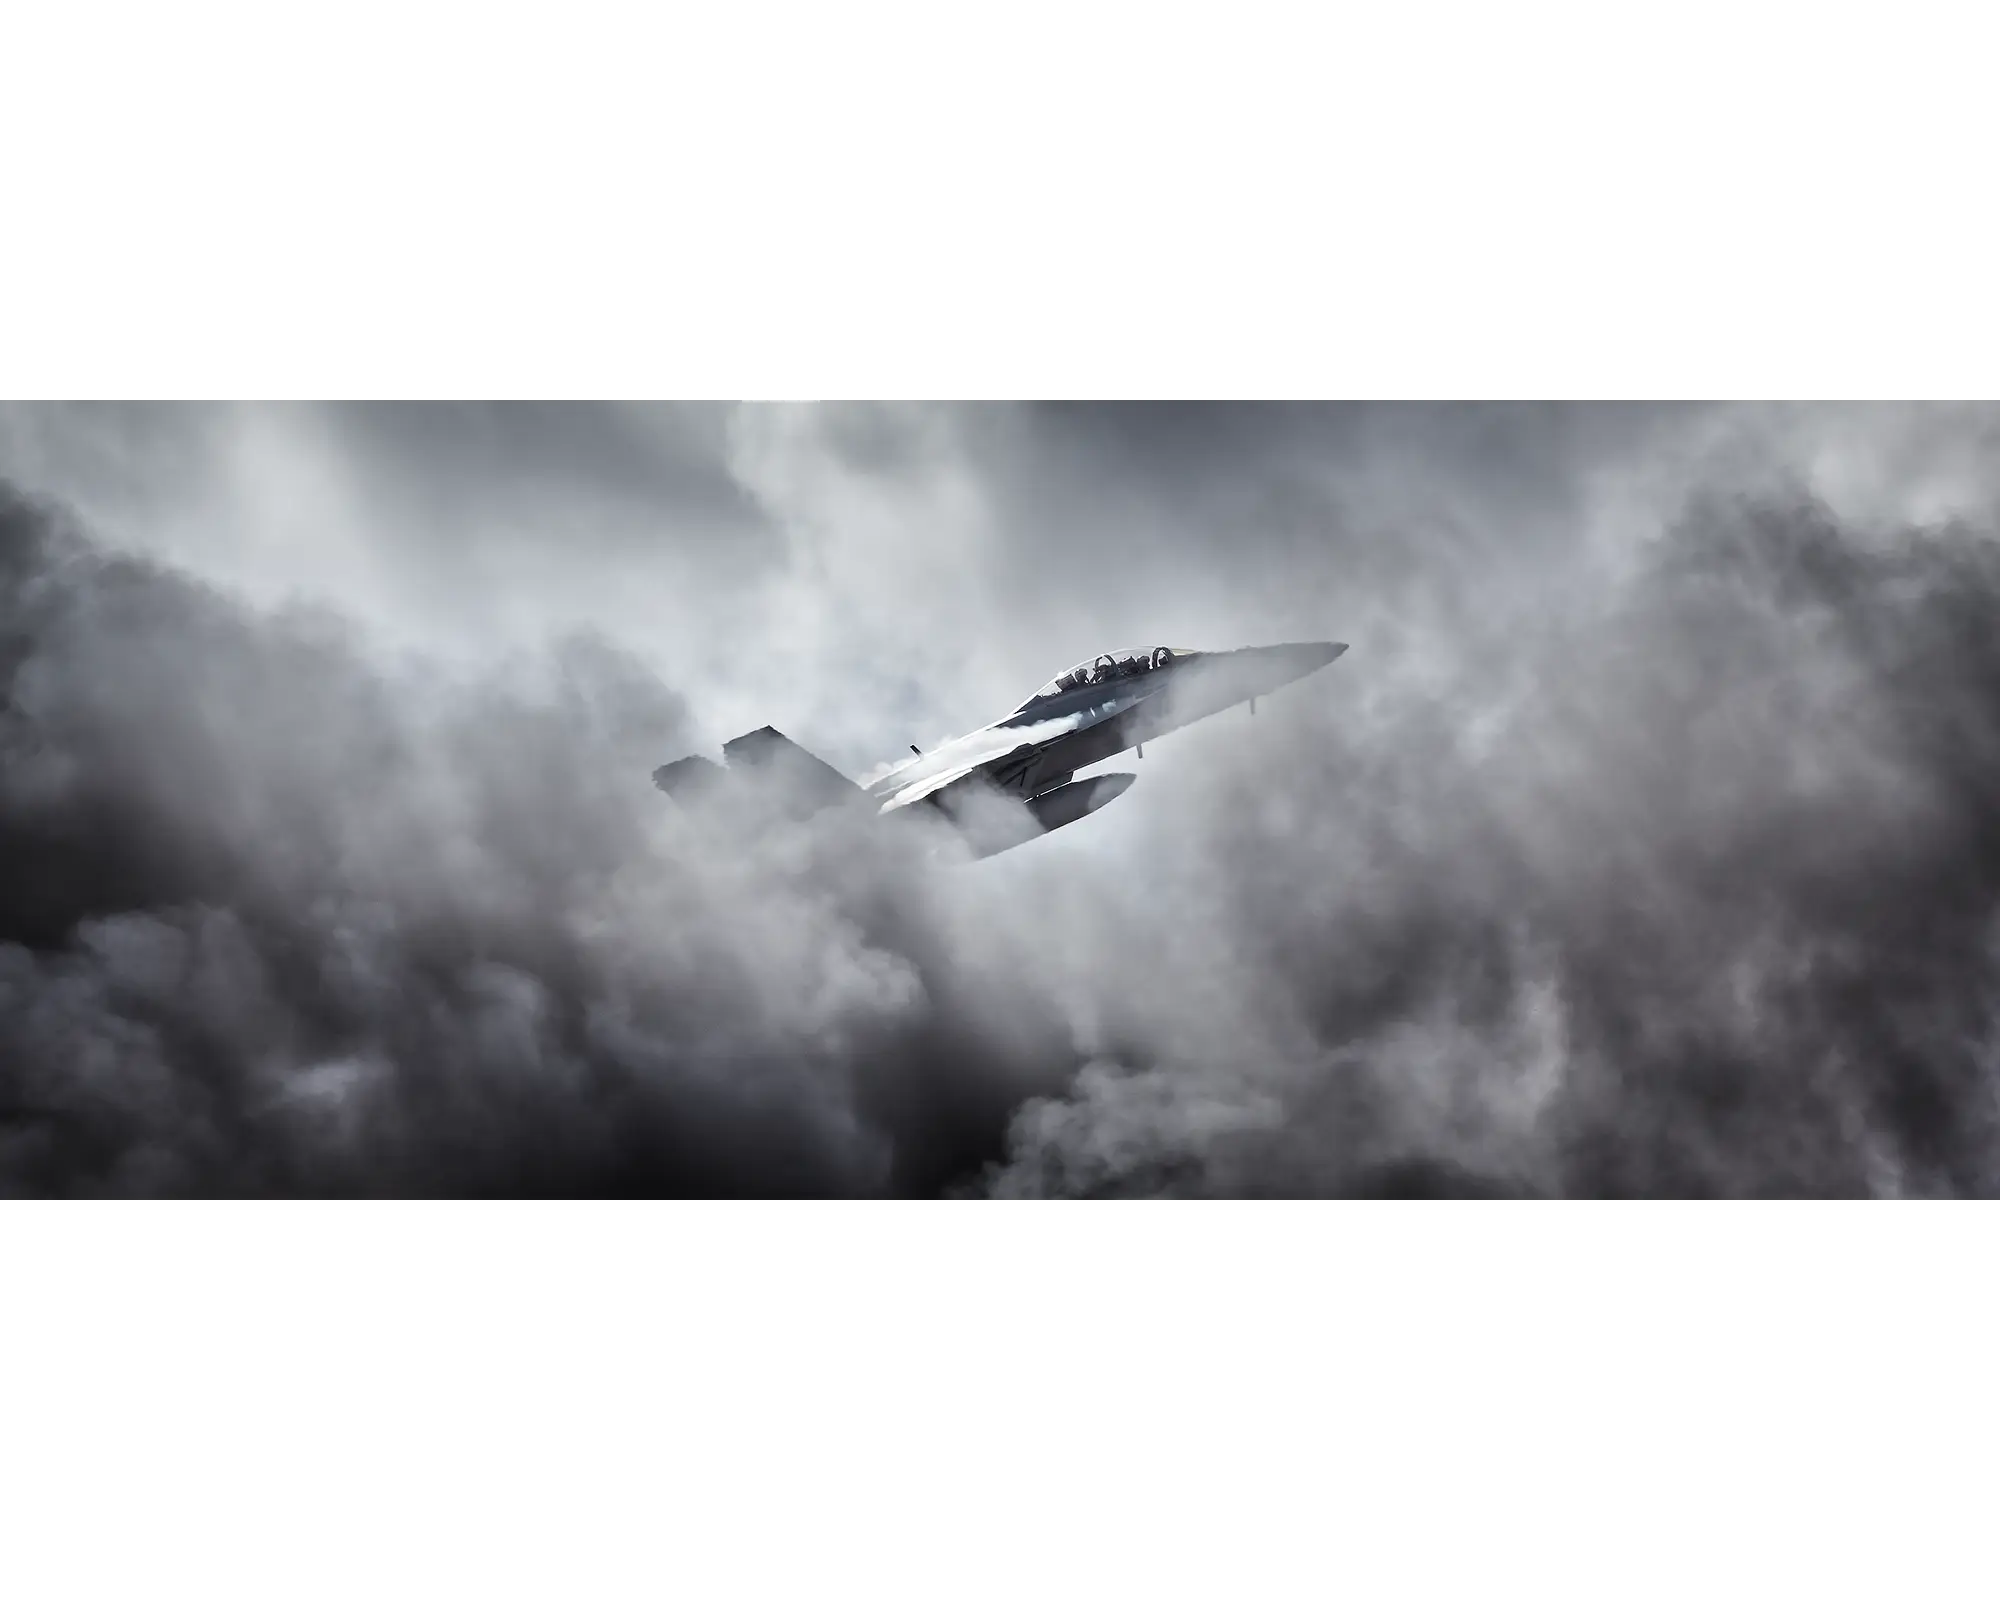 Australian Aior Force F/A-18F Super Hornet flying through clouds.